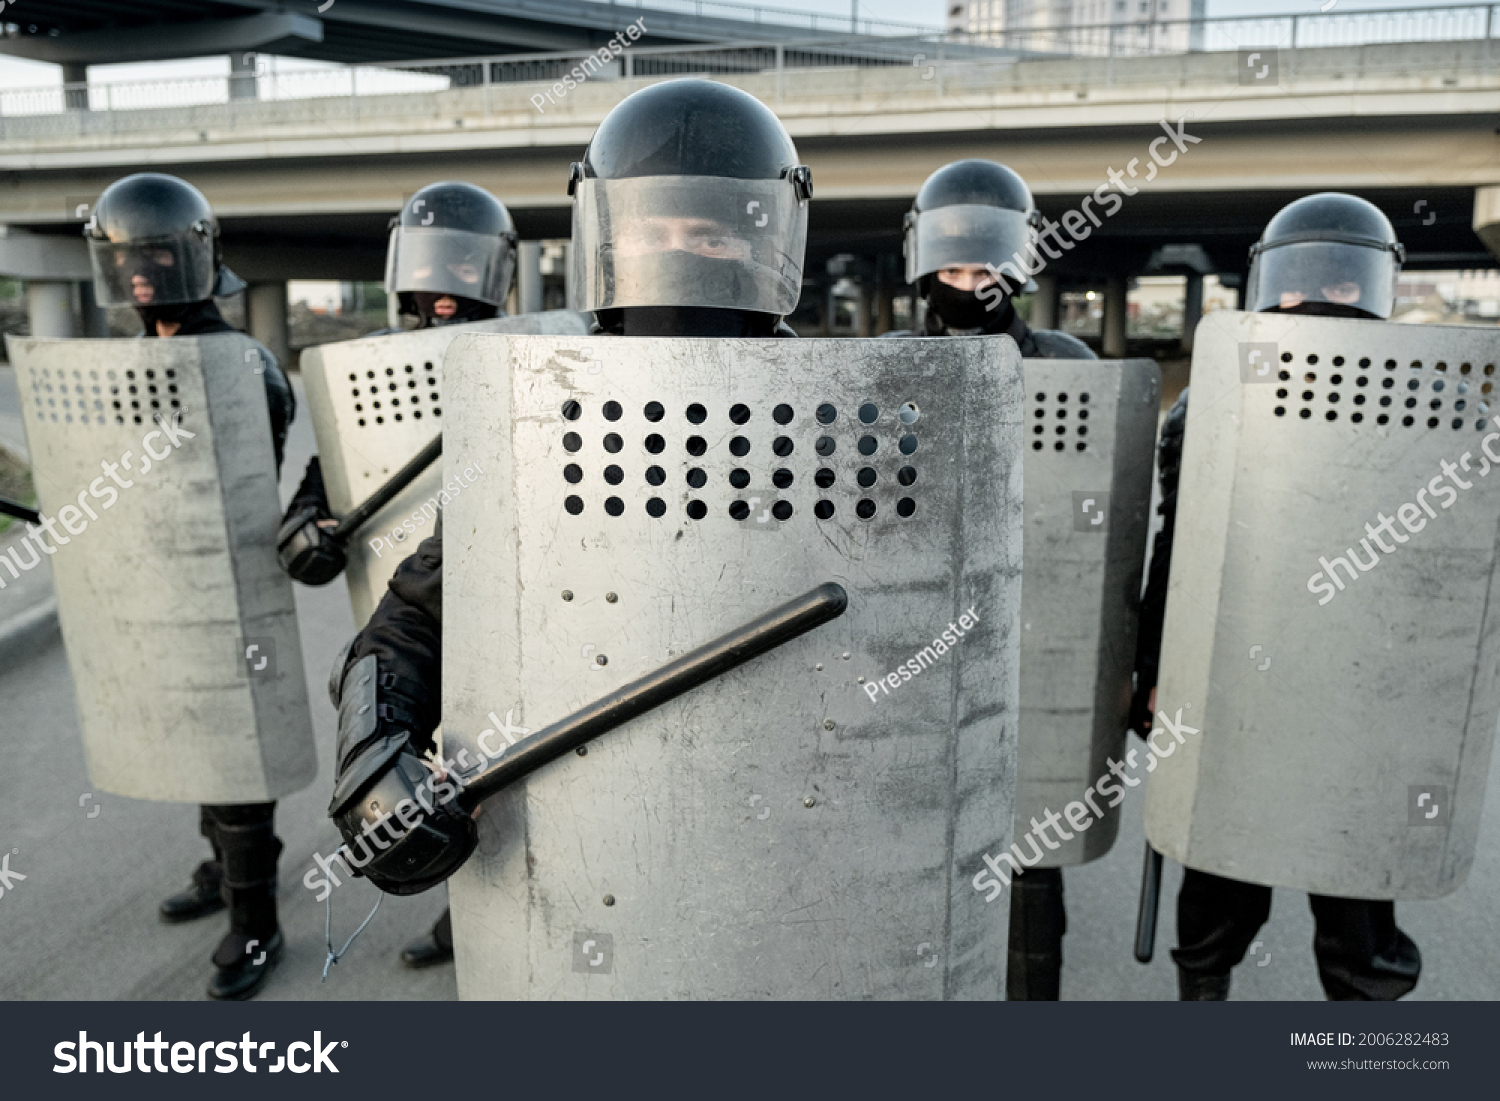 9,928 Riot shield Images, Stock Photos & Vectors | Shutterstock